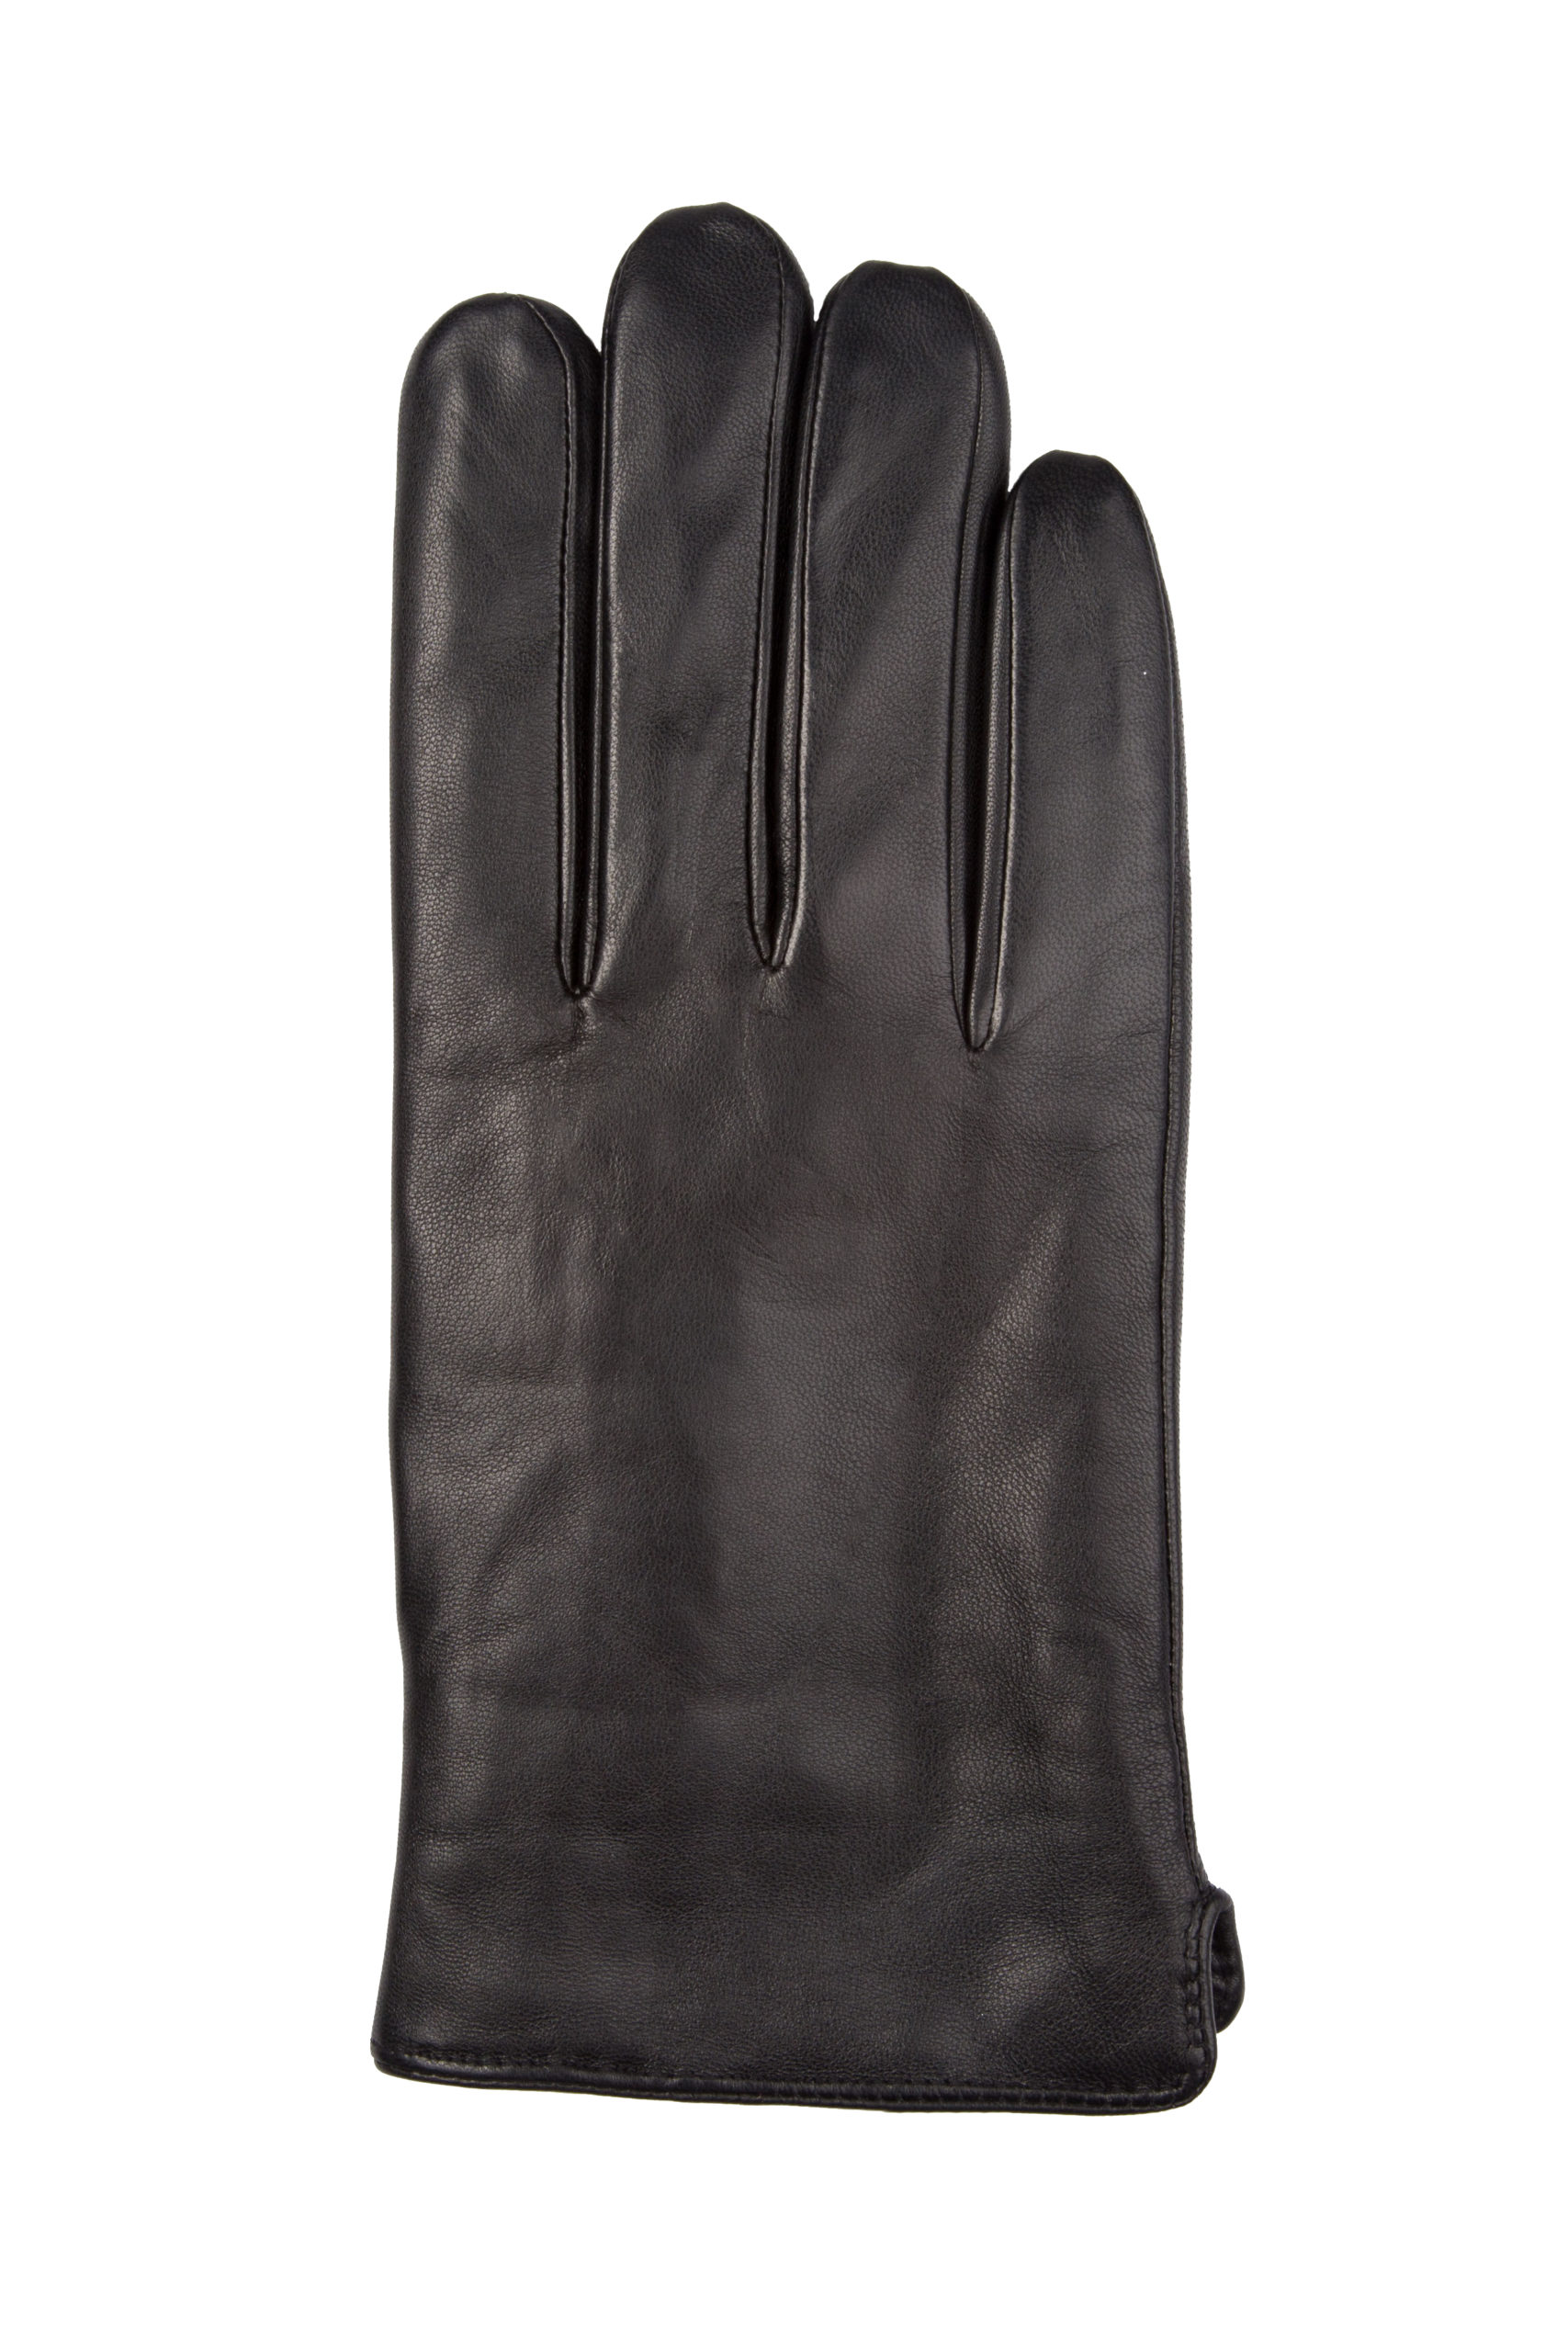 men’s dress leather gloves